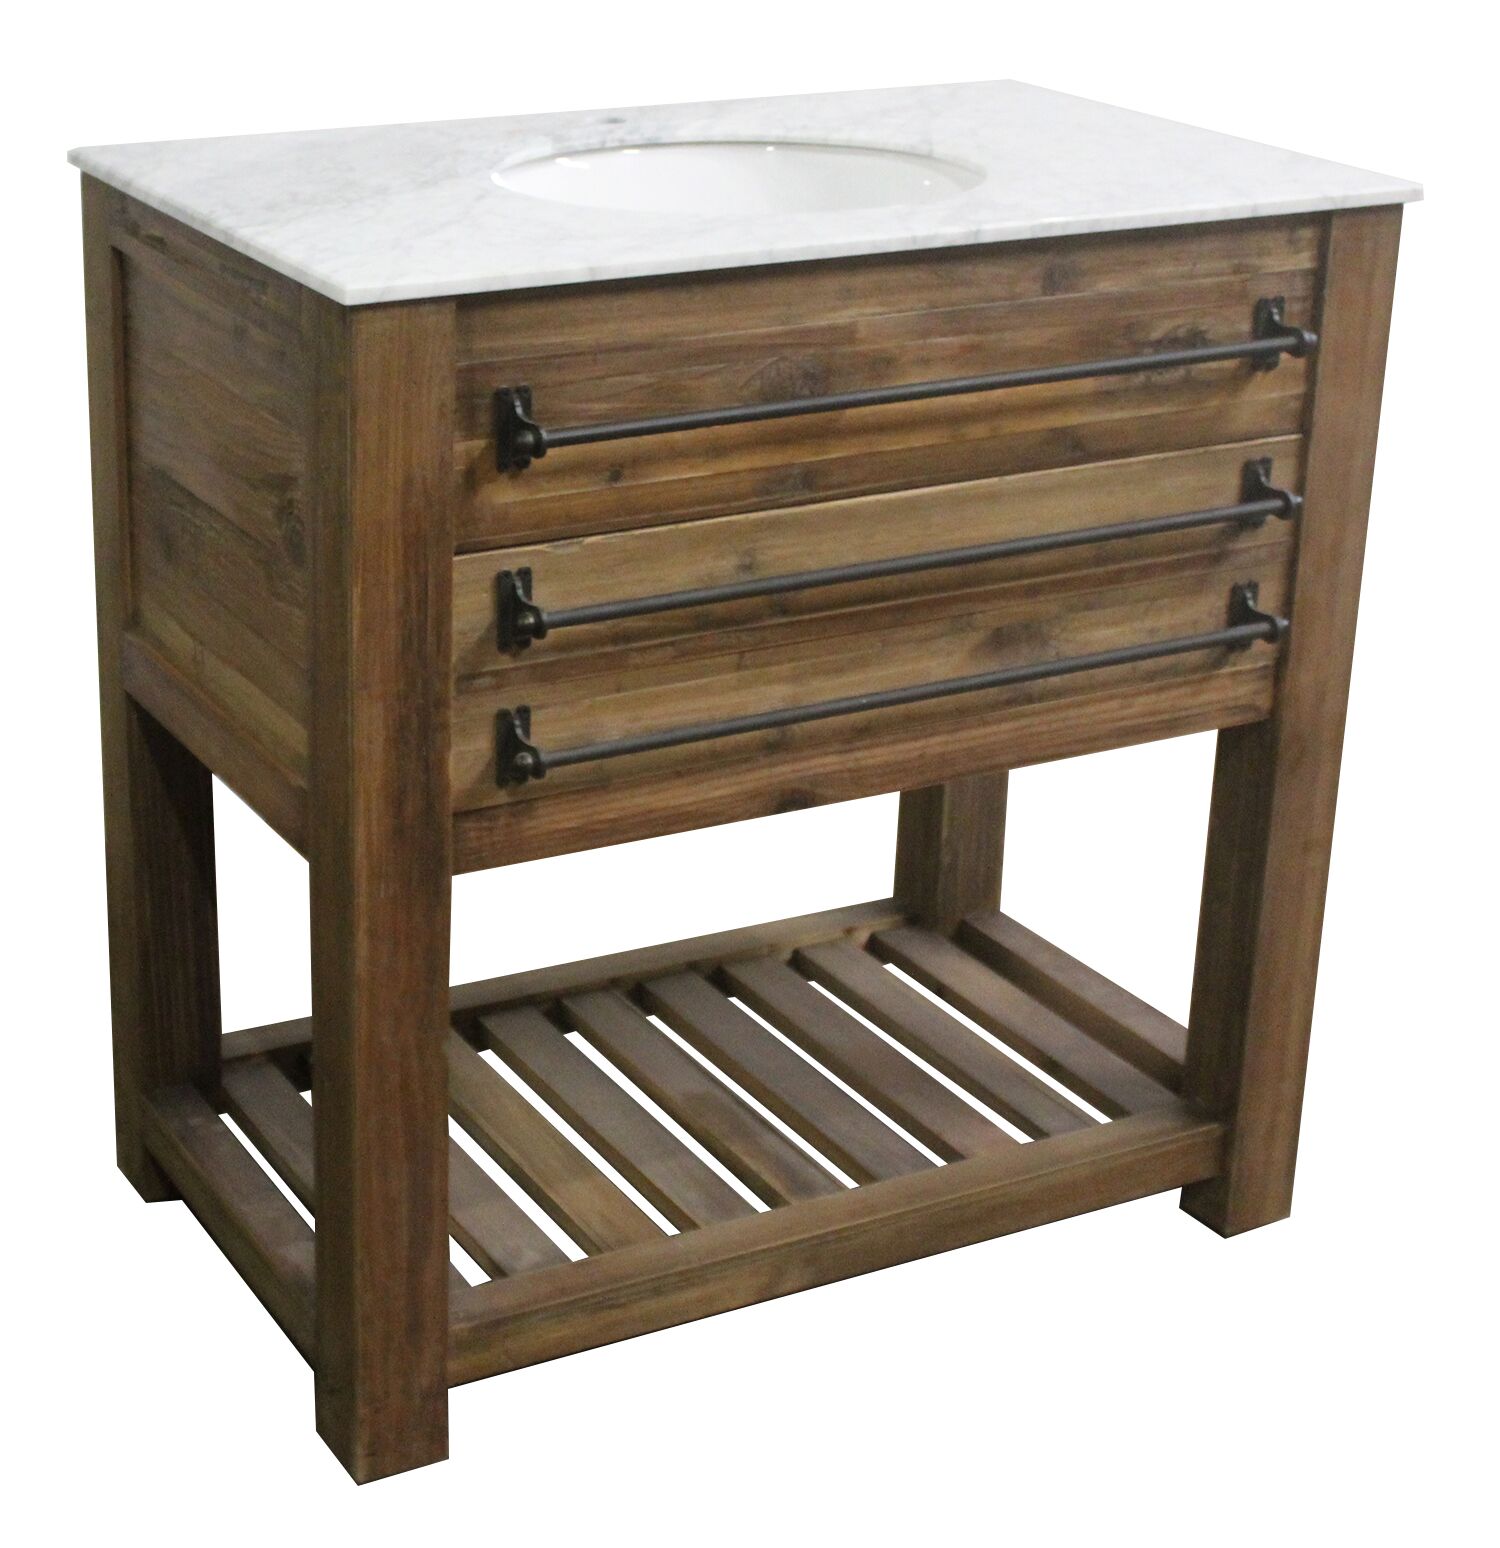 36" Handcrafted Reclaimed Pine Solid Wood Single Bath Vanity Wax Finish